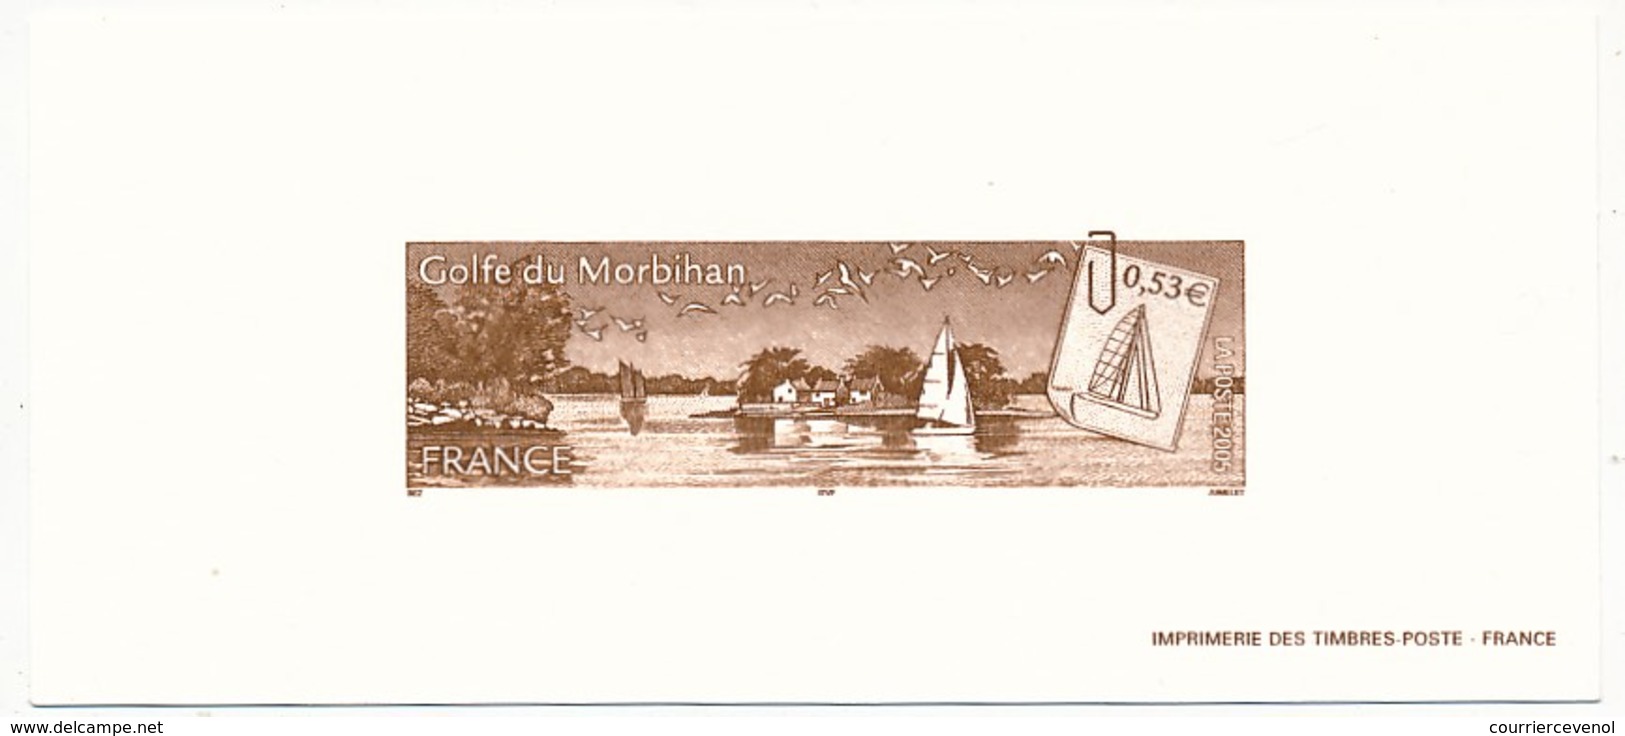 FRANCE - Gravure Du Timbre 0,53E Golfe Du Morbihan - Pruebas De Lujo